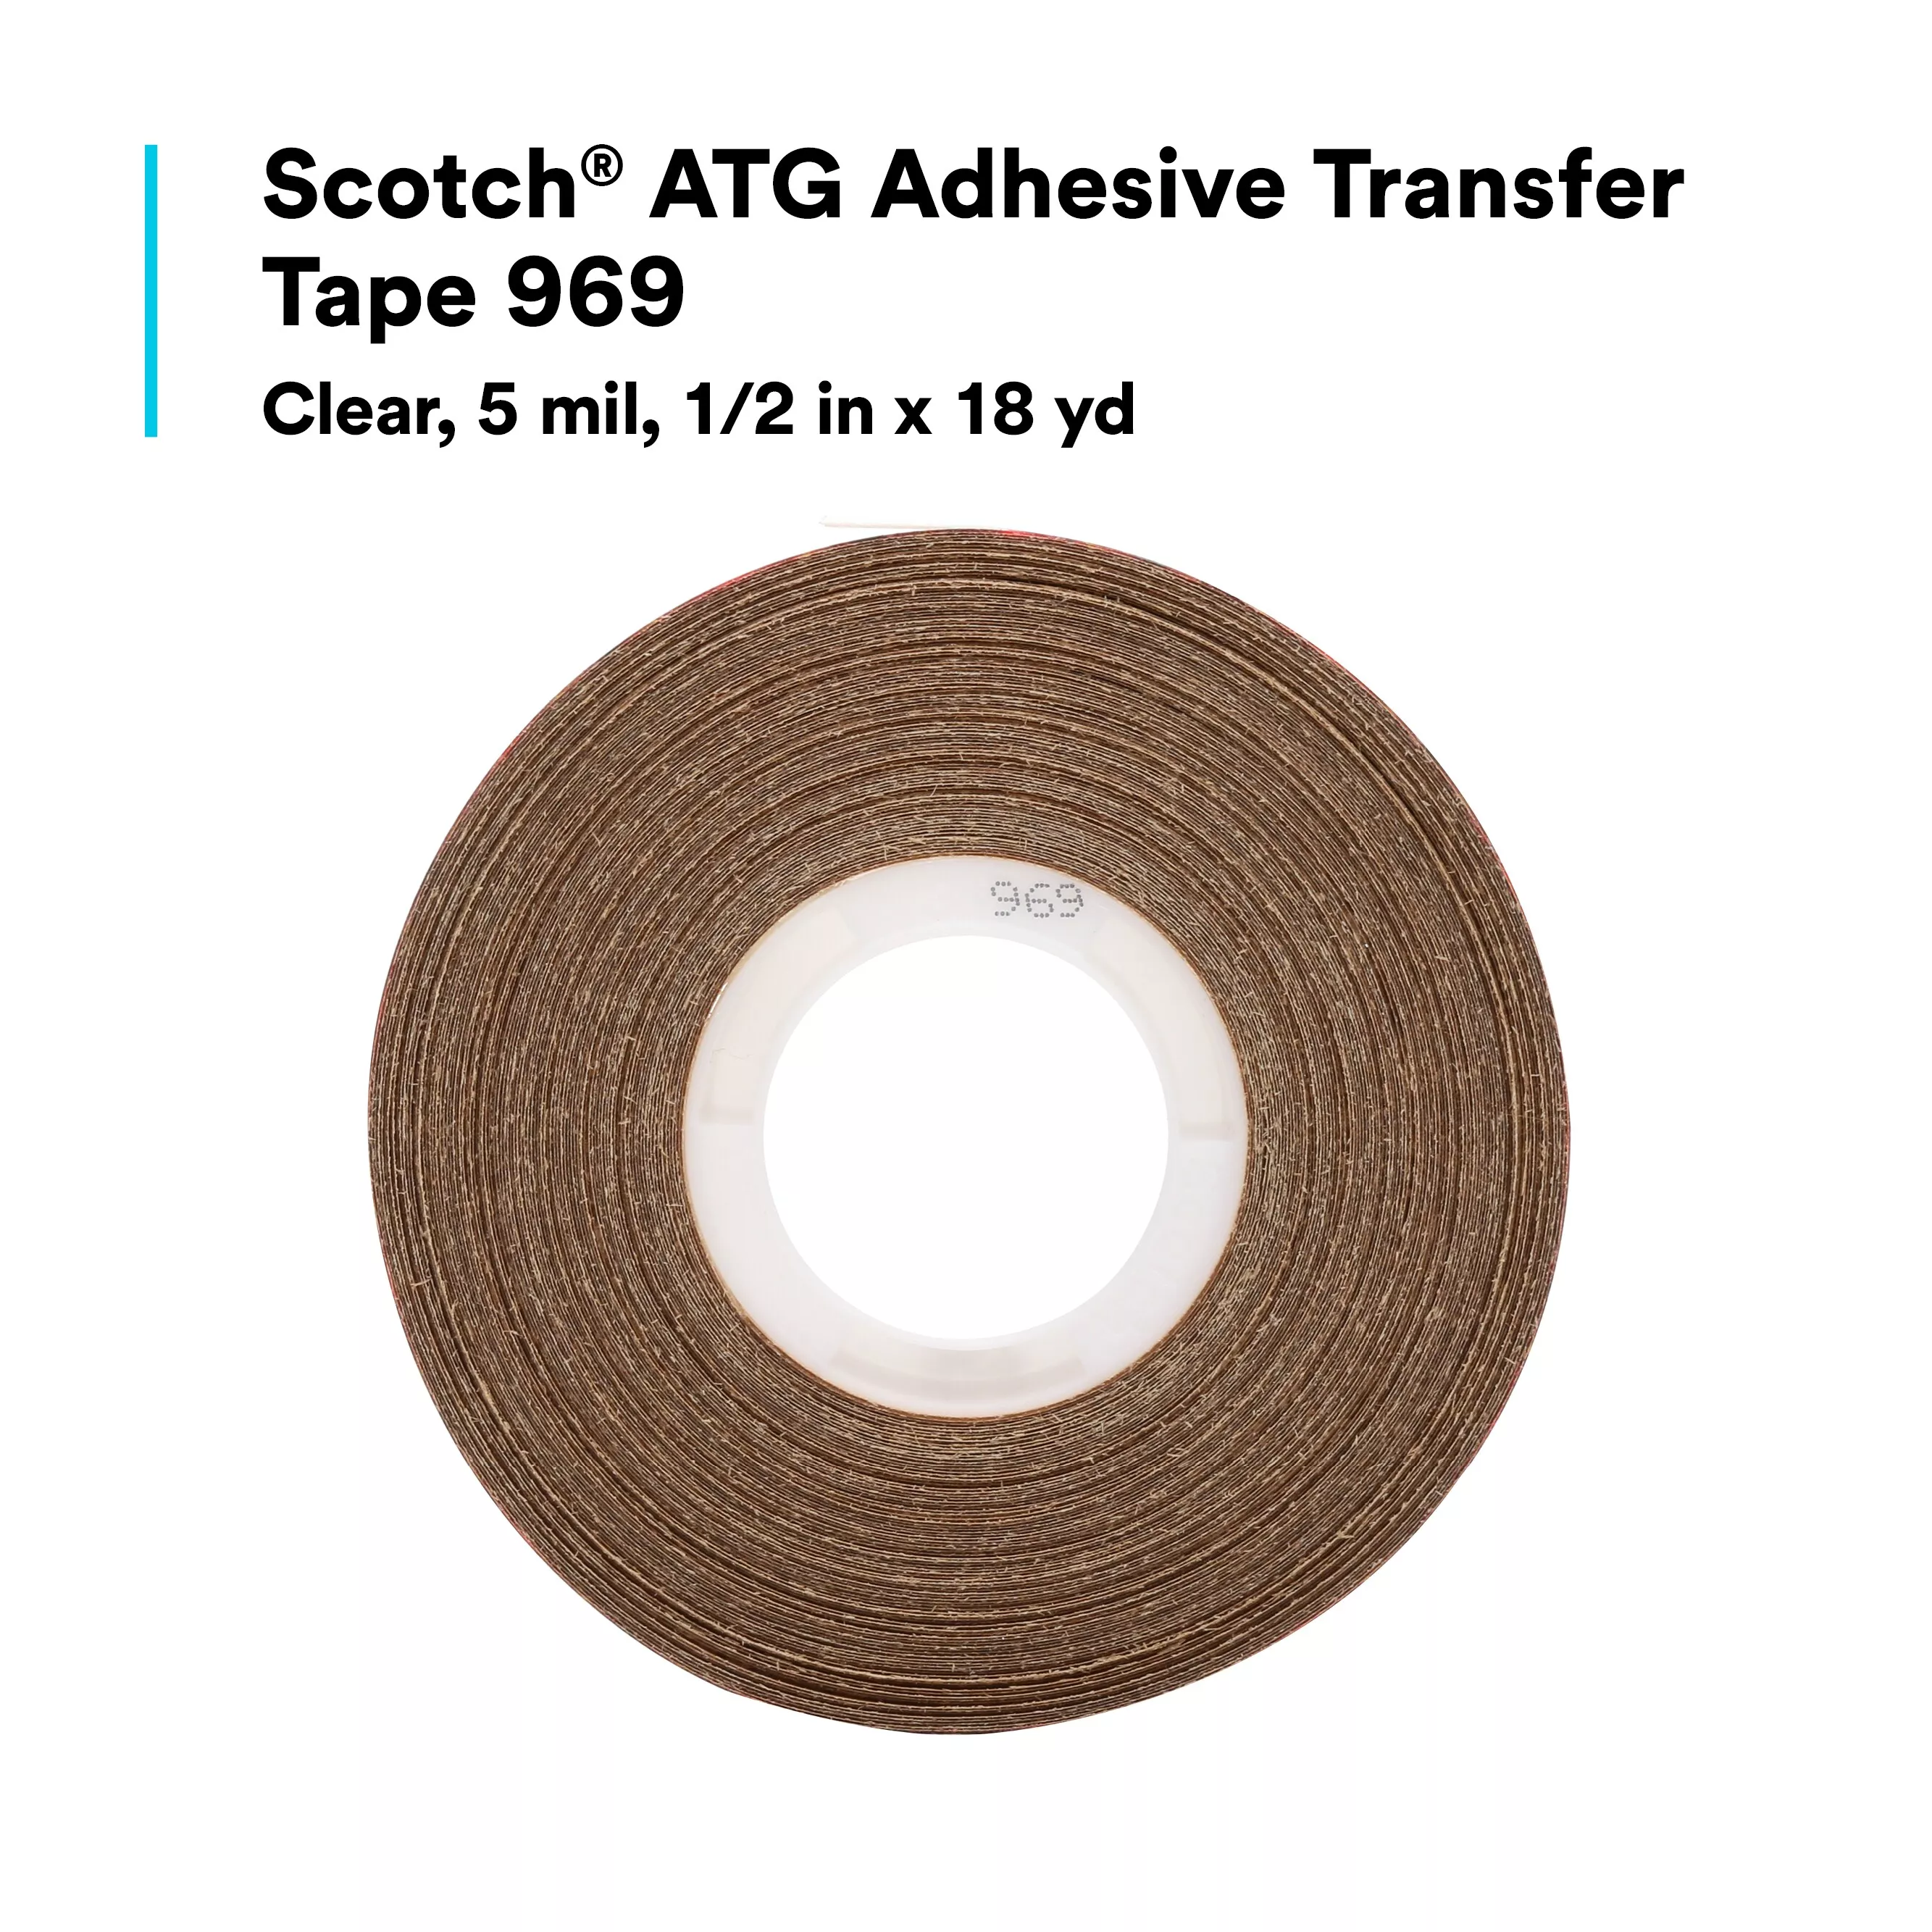 SKU 7010312522 | Scotch® ATG Adhesive Transfer Tape 969